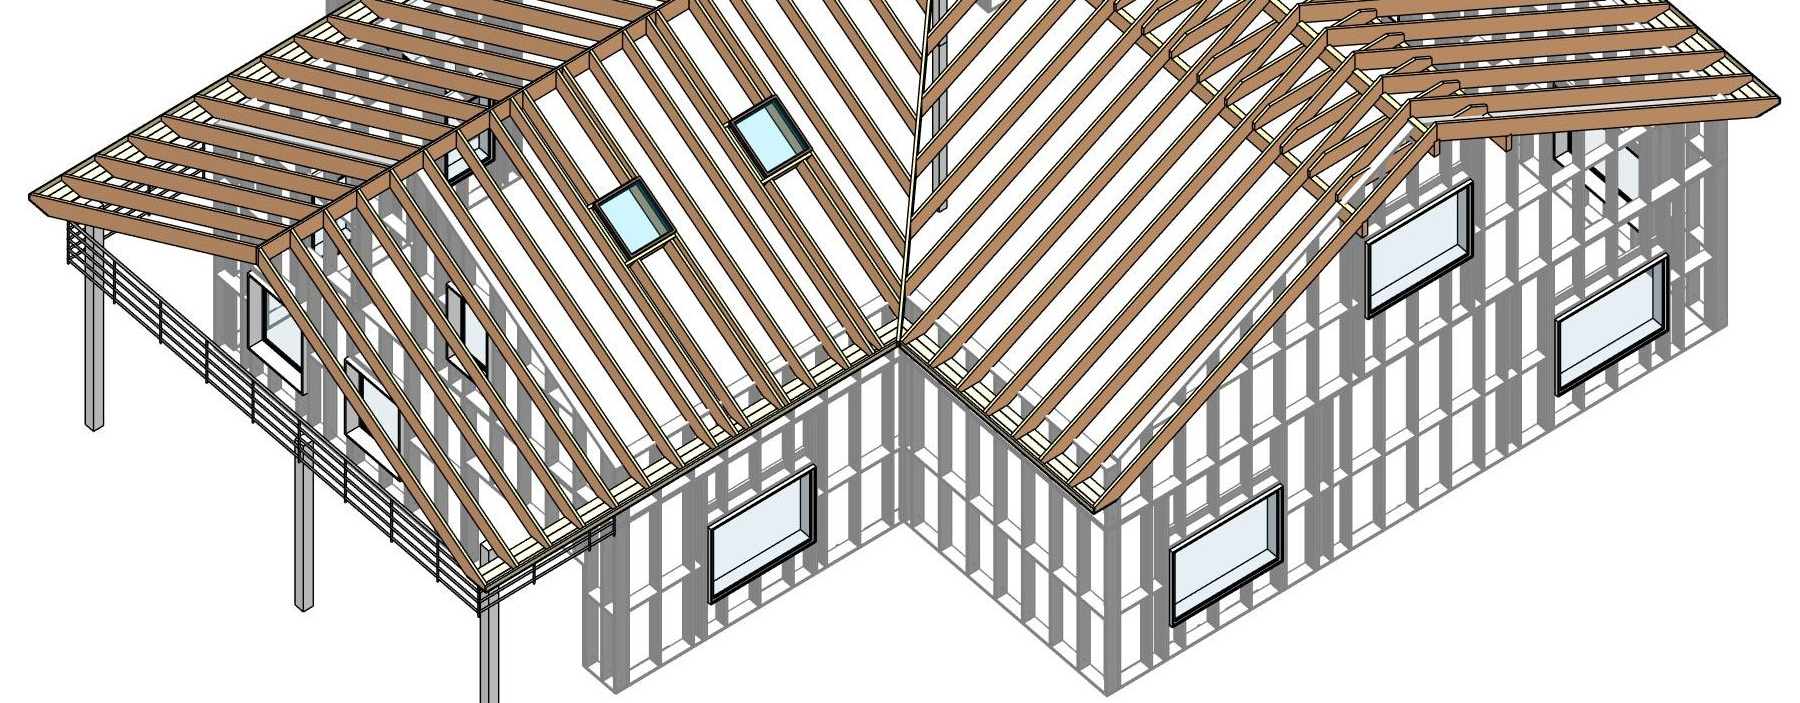 wood framing extension revit 2014 download